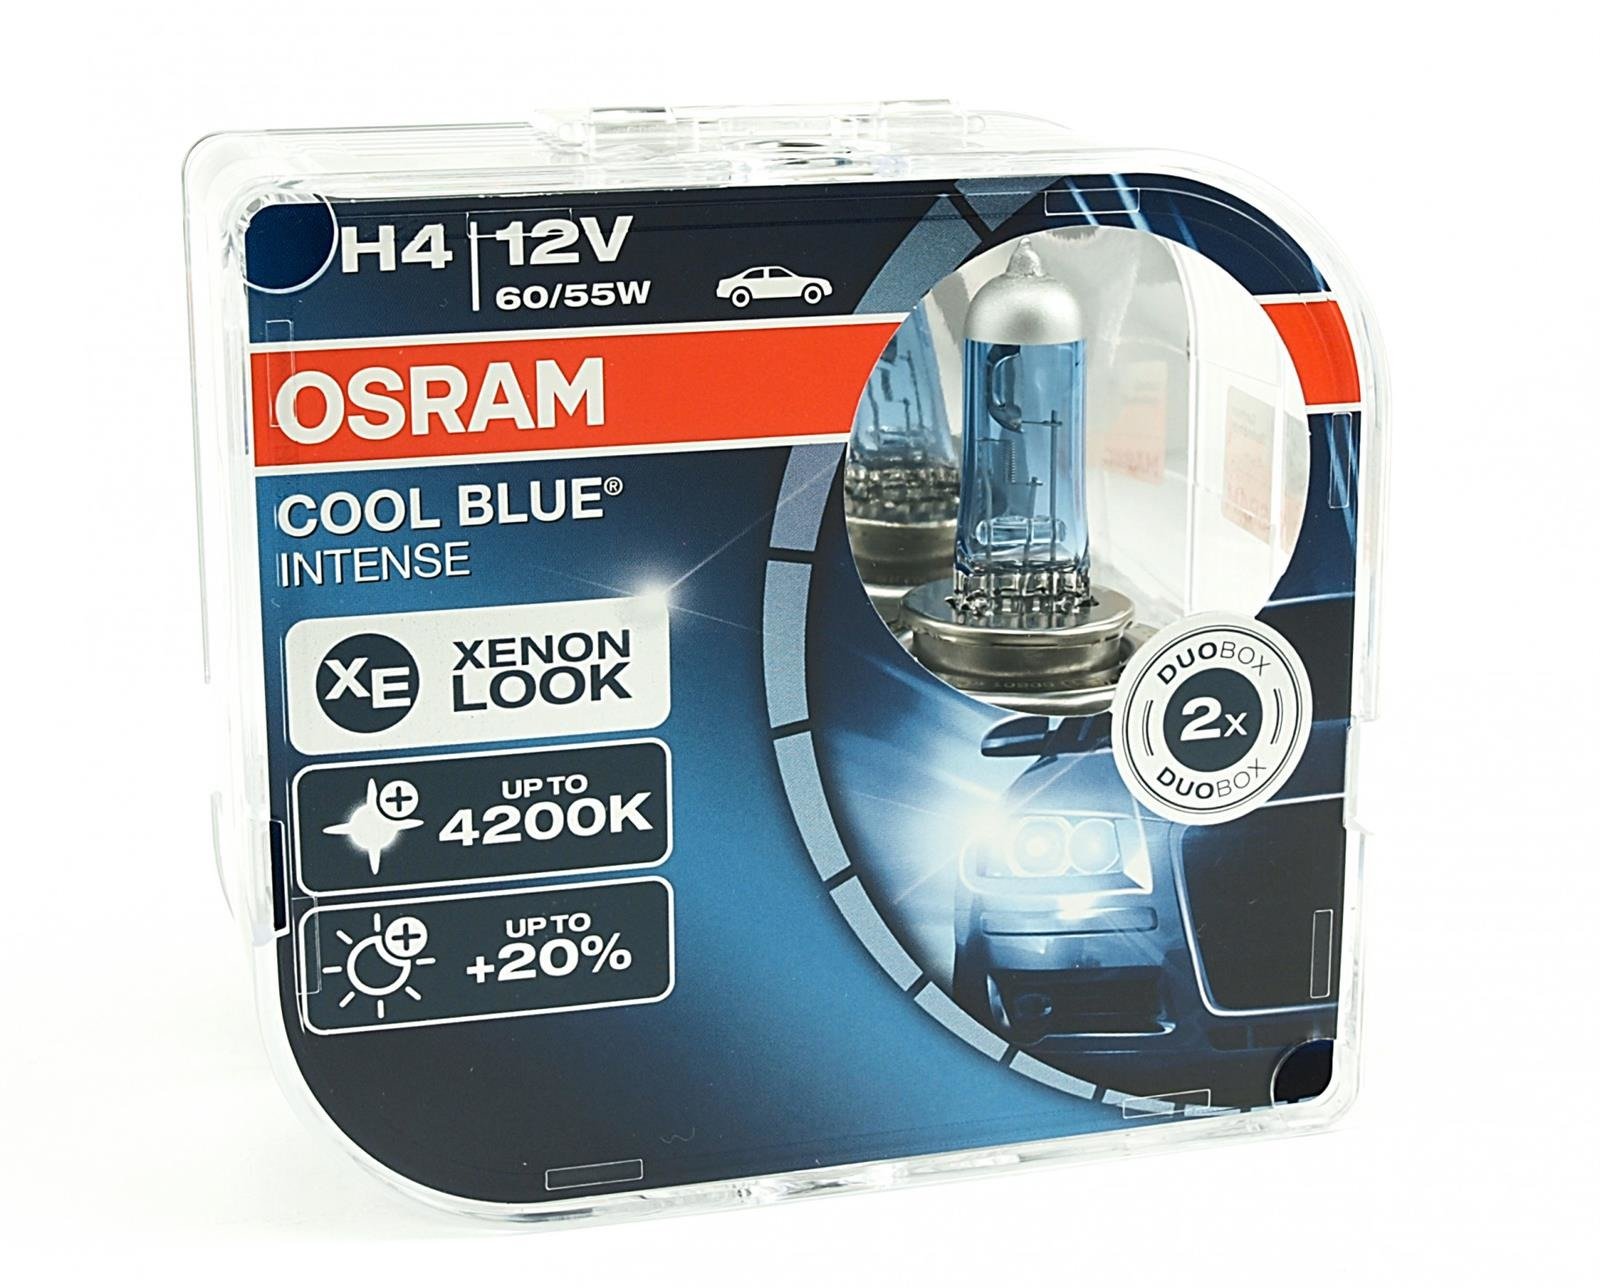 H4 12V 60/55W P43t Cool Blue INTENSE 2pcs Osram